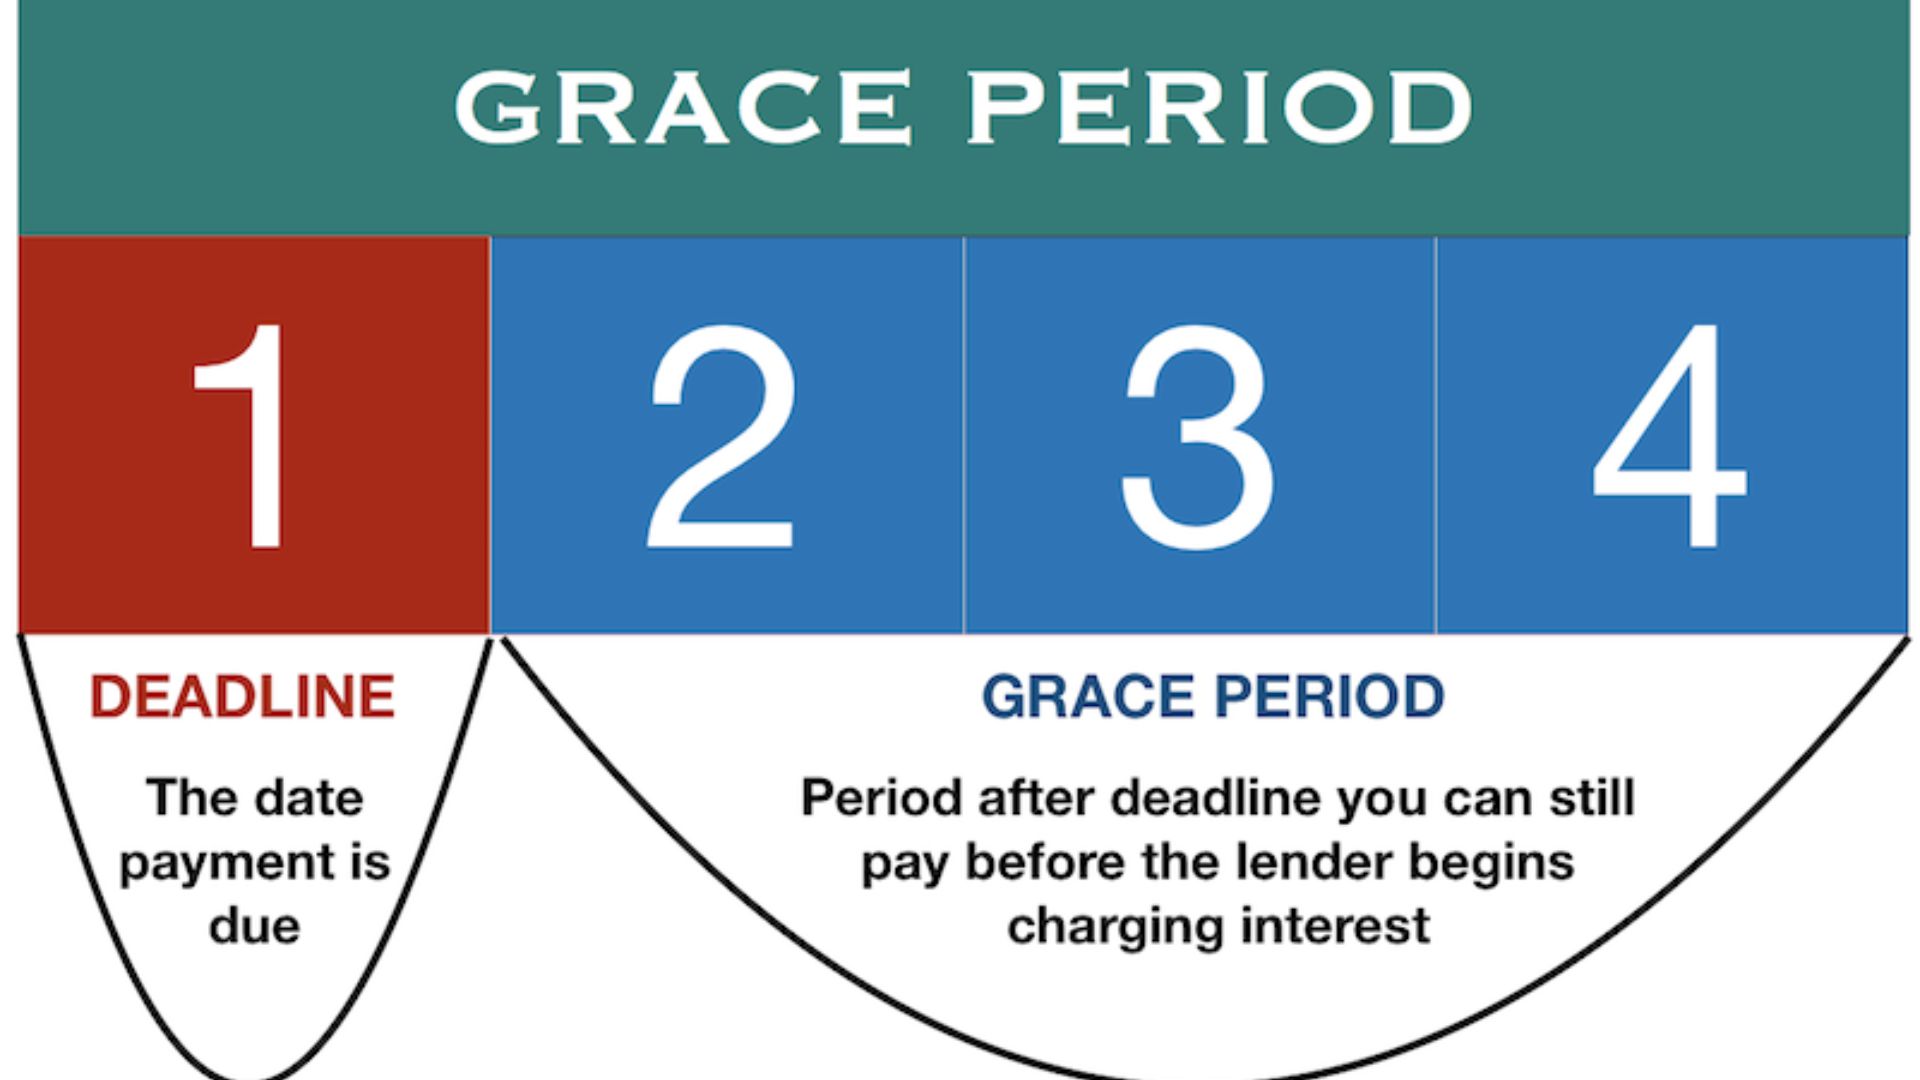 No Grace Period Interest Starts Immediately.